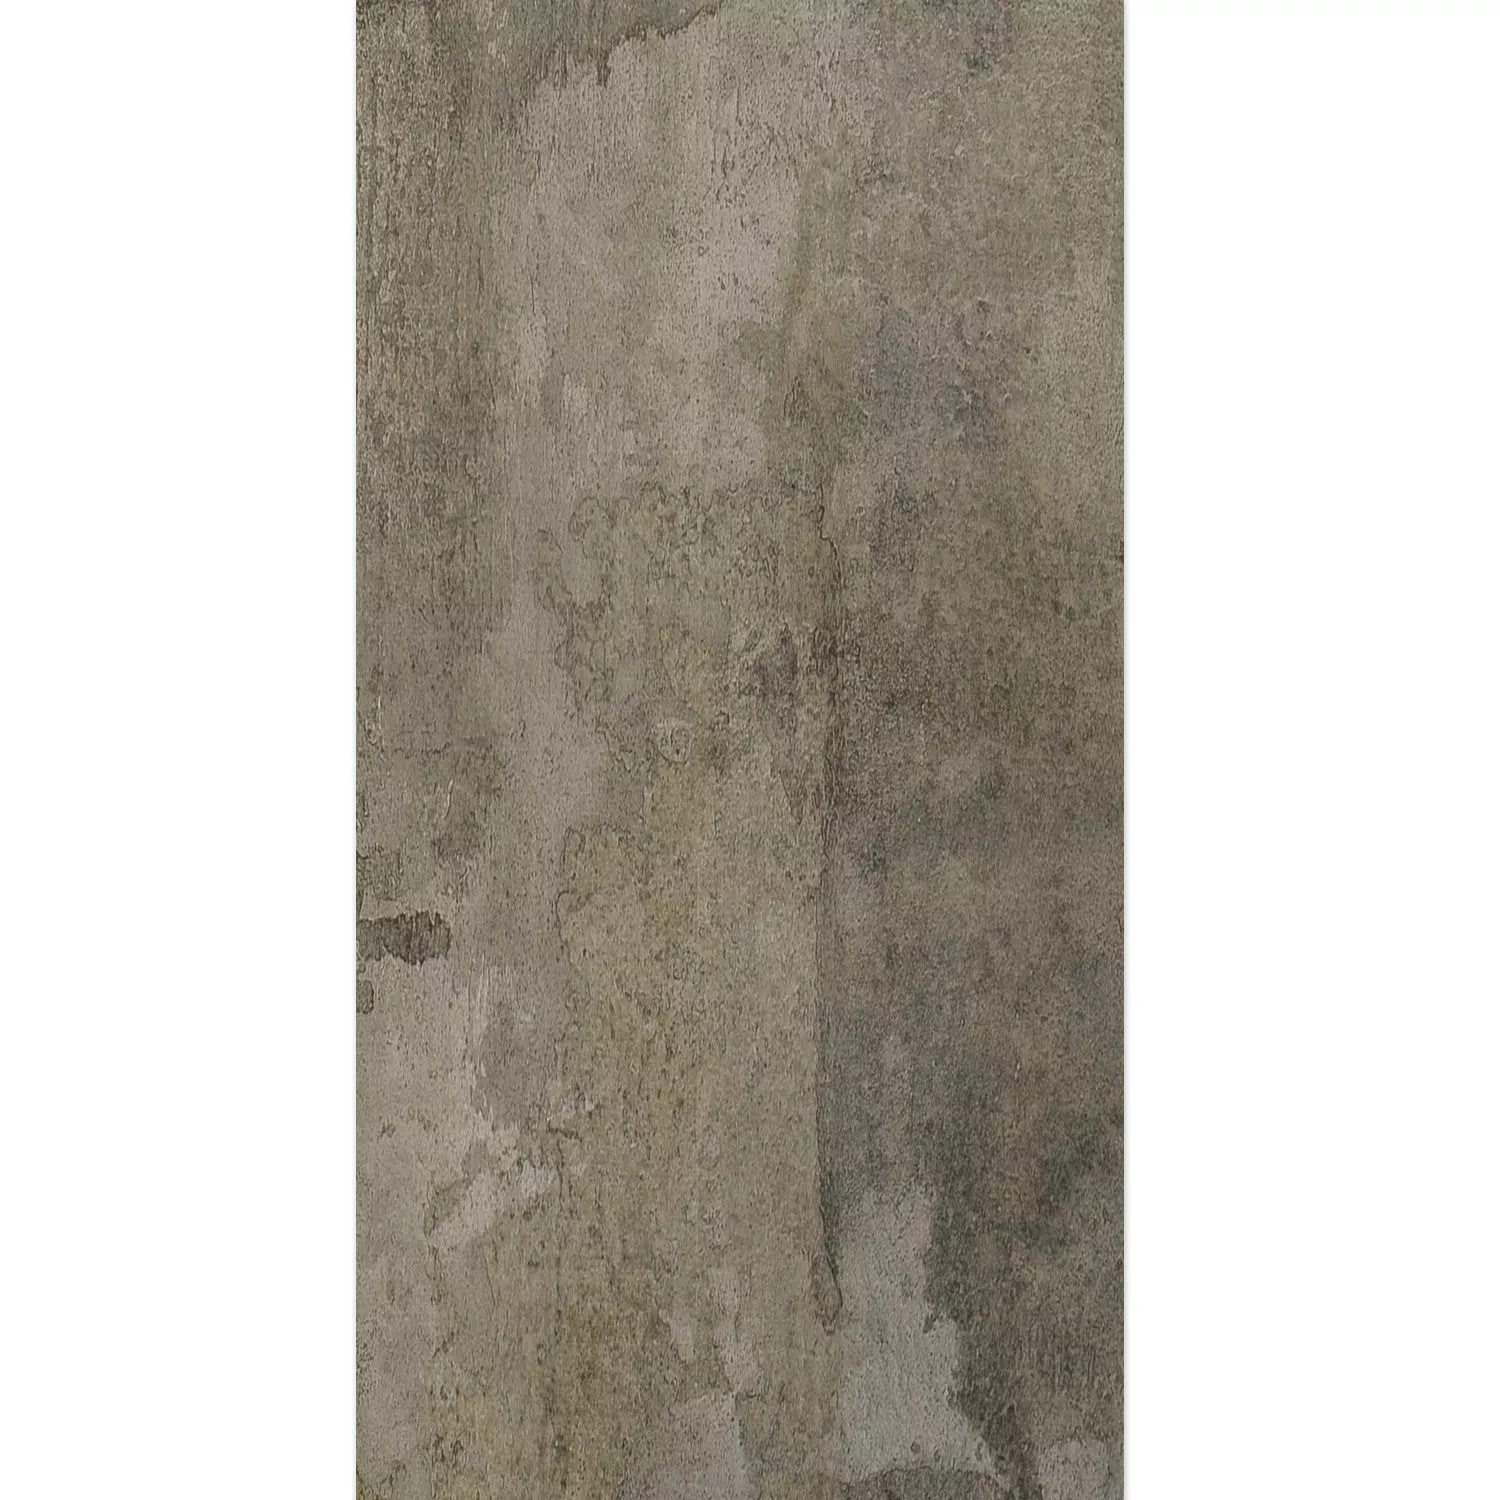 Vzorek Podlahové Dlaždice Haarlem Graphit 45x90cm